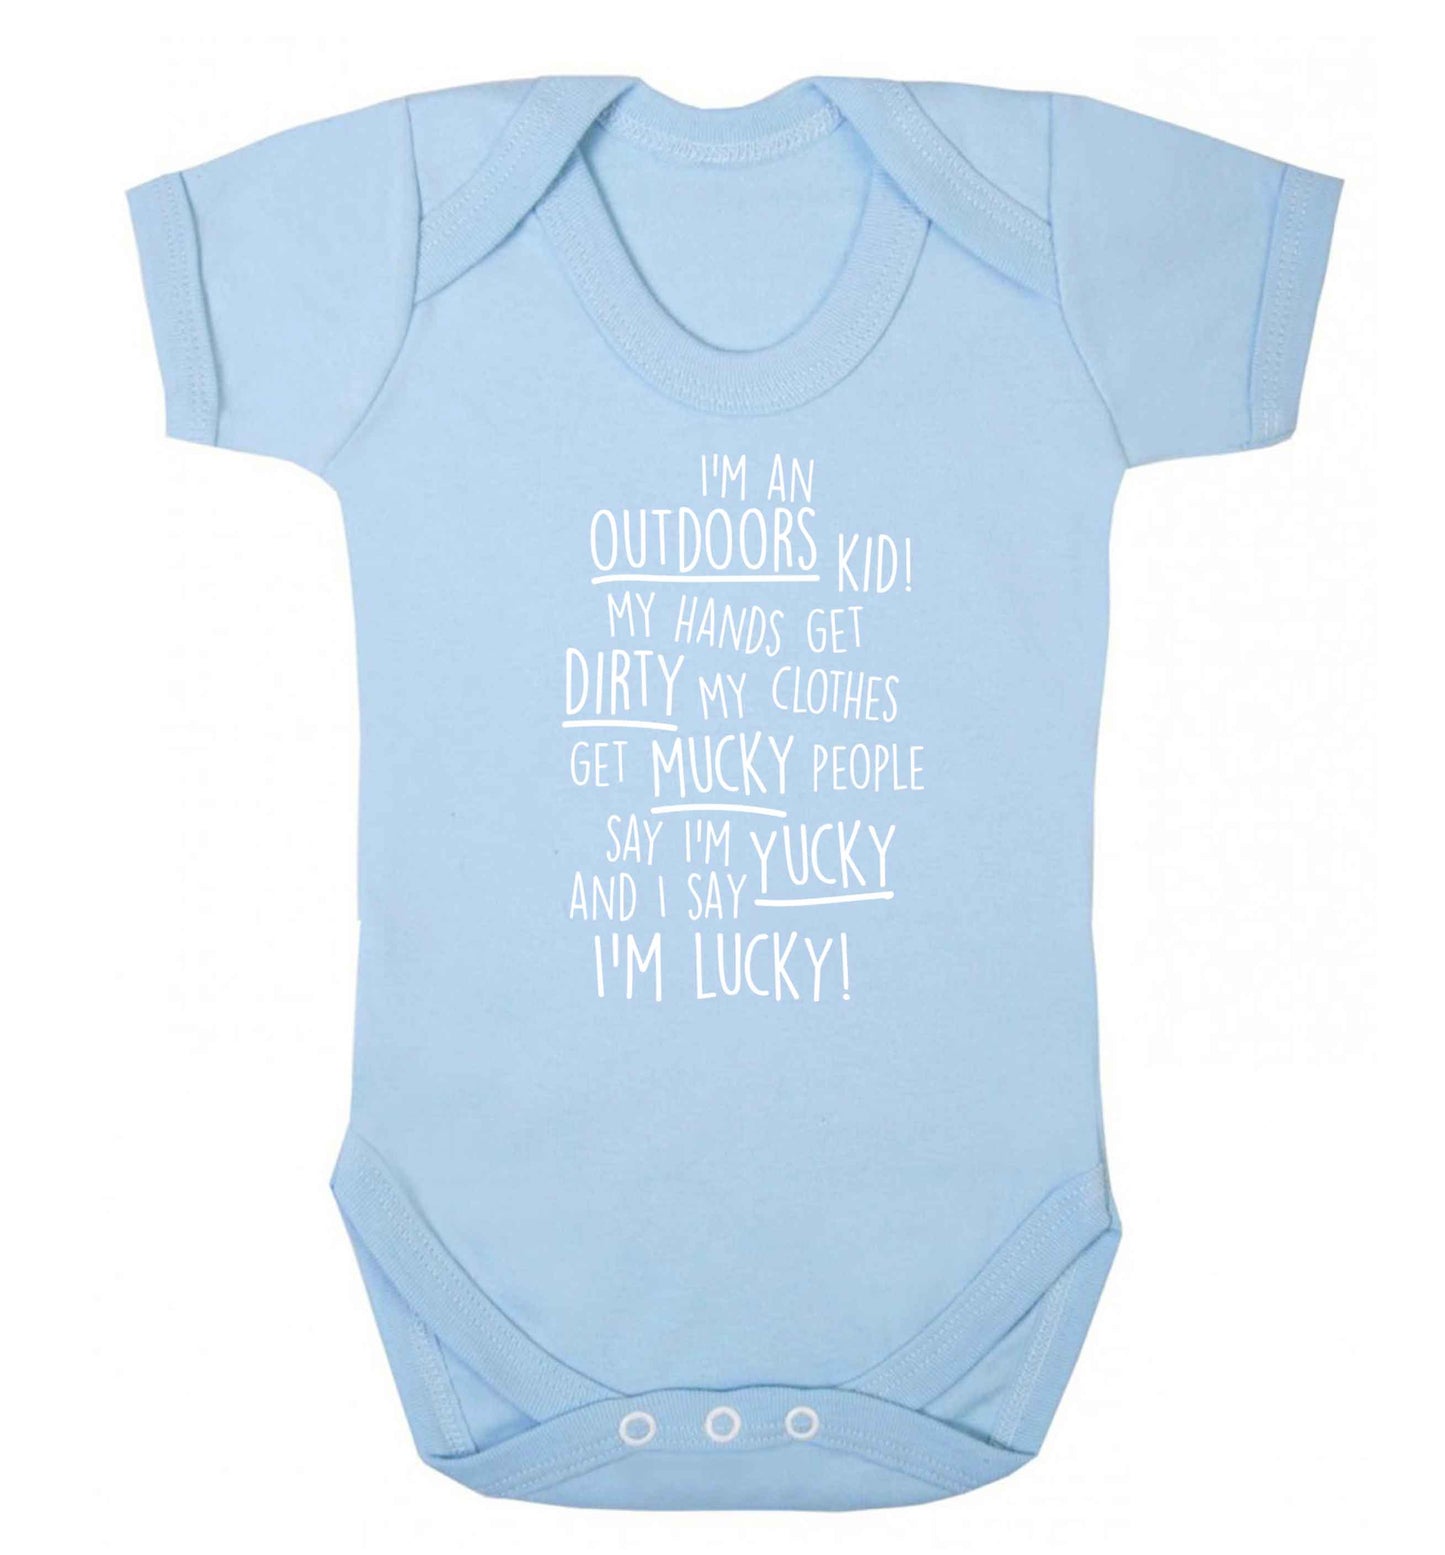 I'm an outdoors kid poem Baby Vest pale blue 18-24 months